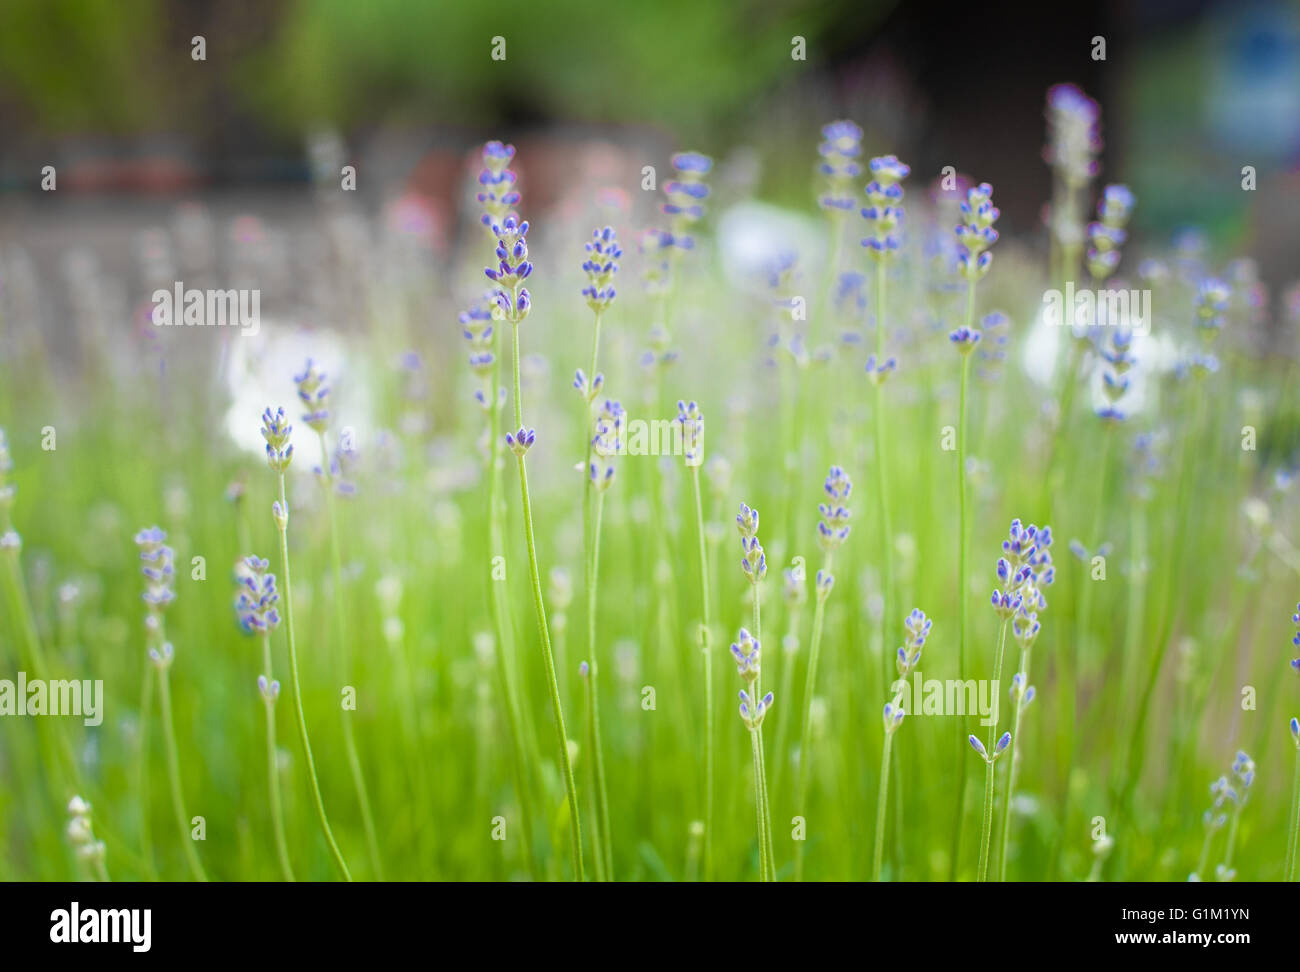 Lavendel-Busch grün mit lila Blüten Nahaufnahme in selektiven Fokus Stockfoto